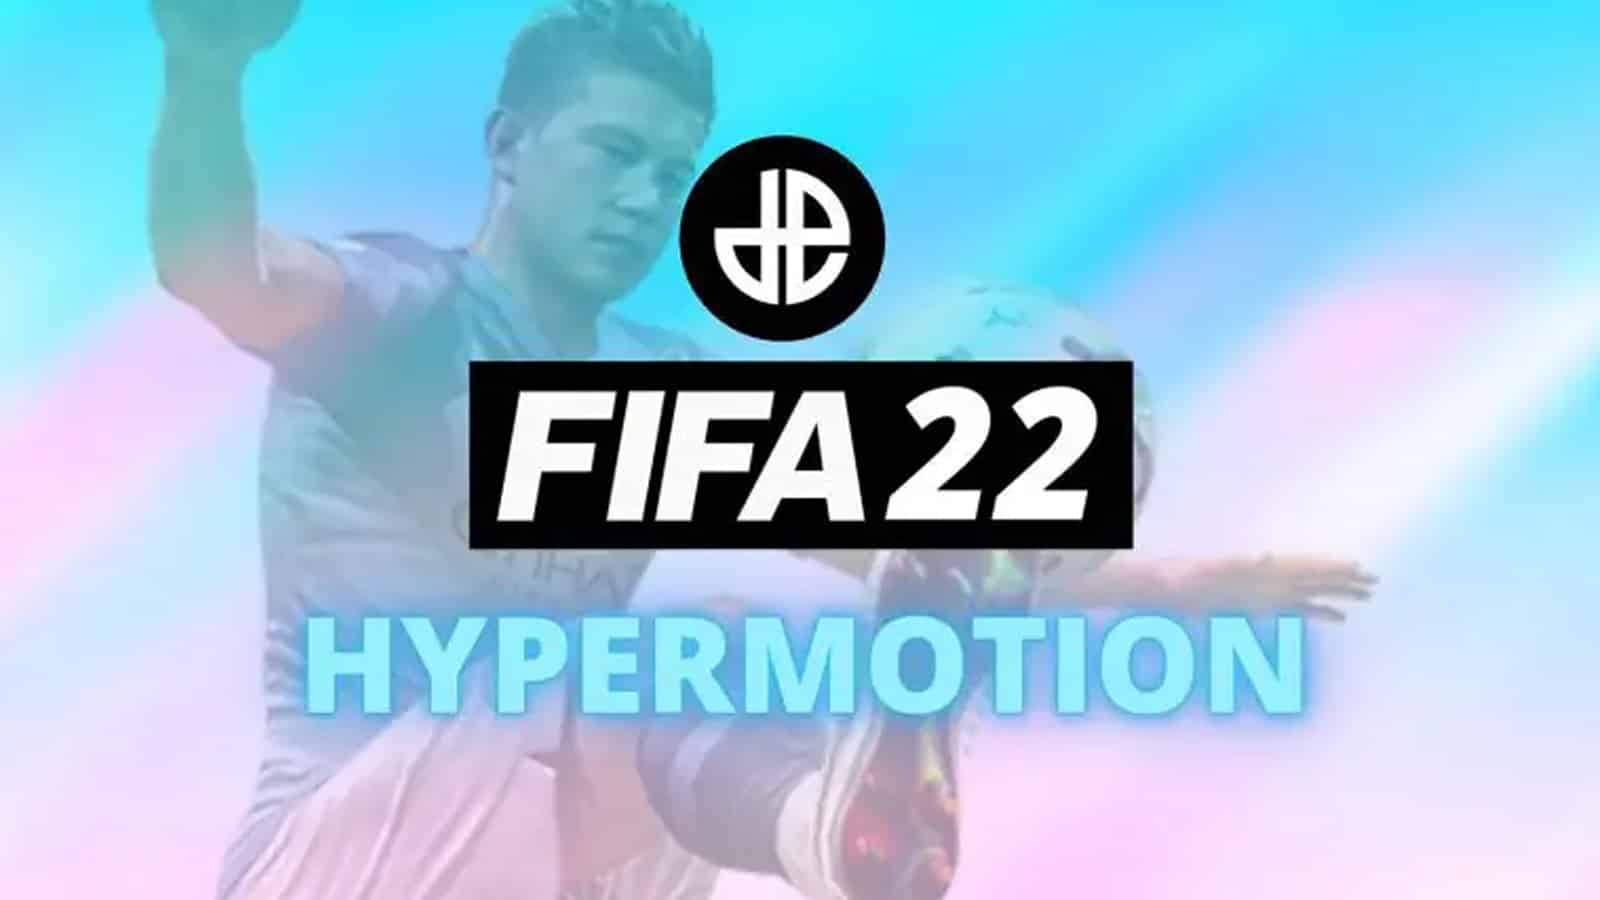 FIFA 22 hypermotion